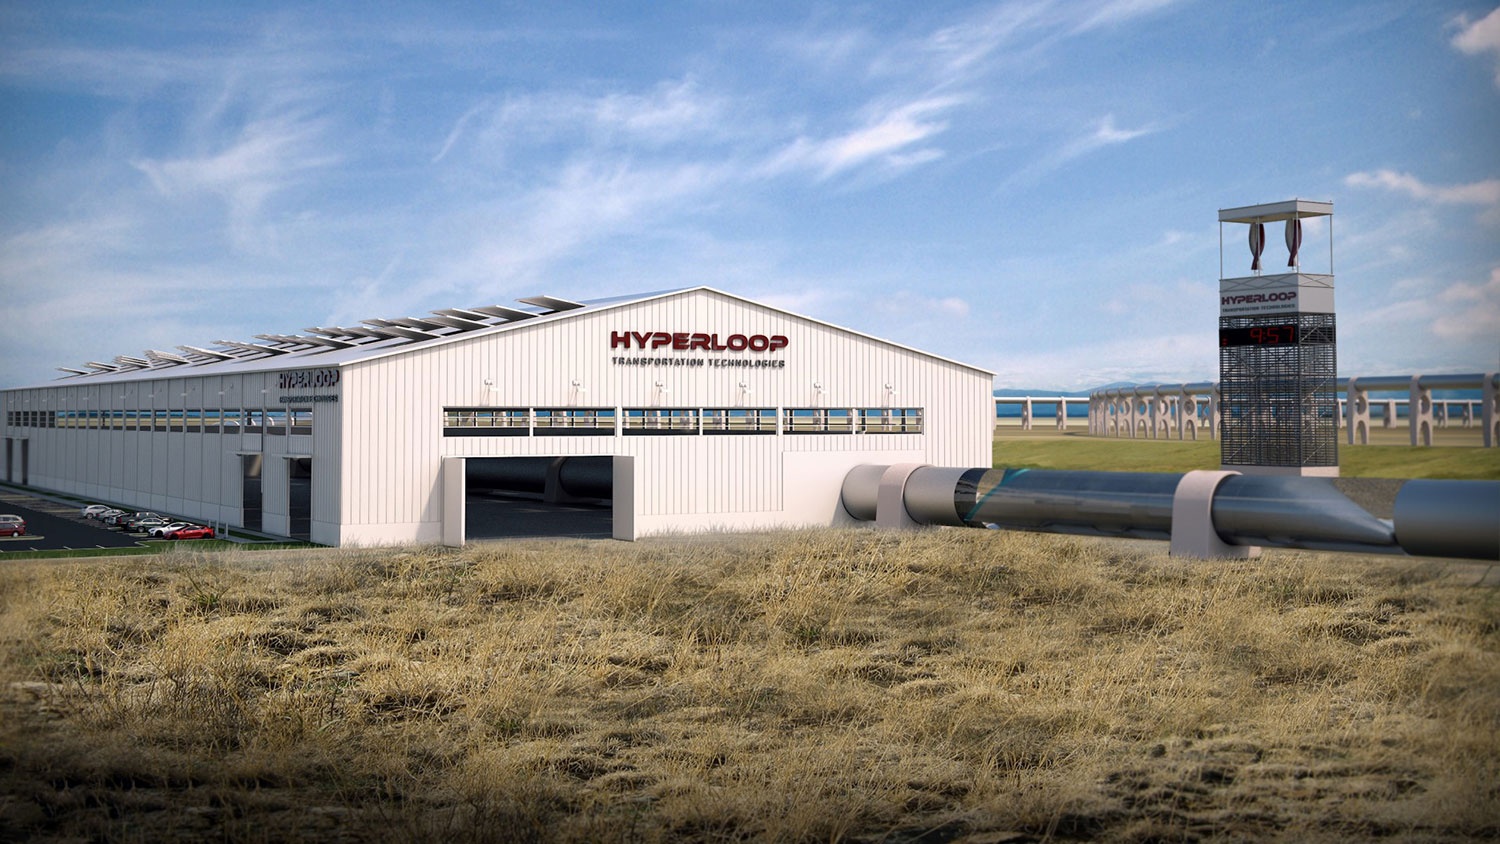 hyperlopp nueva forma transporte hyperloop project 0020 1500x844